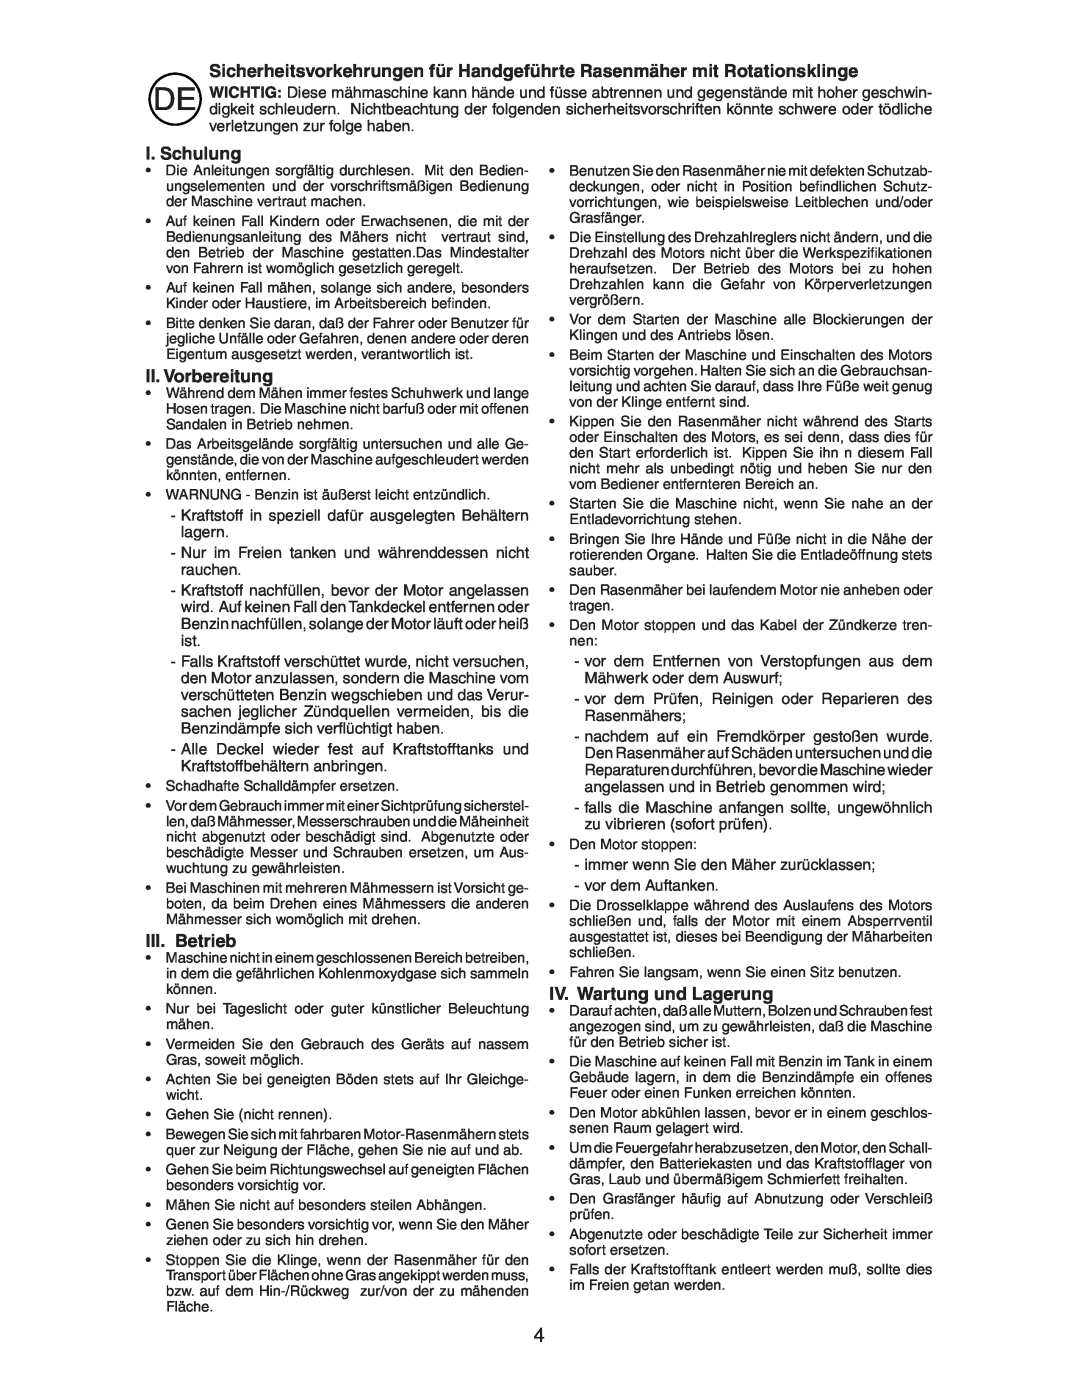 McCulloch M7053D instruction manual I. Schulung, II. Vorbereitung, III. Betrieb, IV. Wartung und Lagerung 